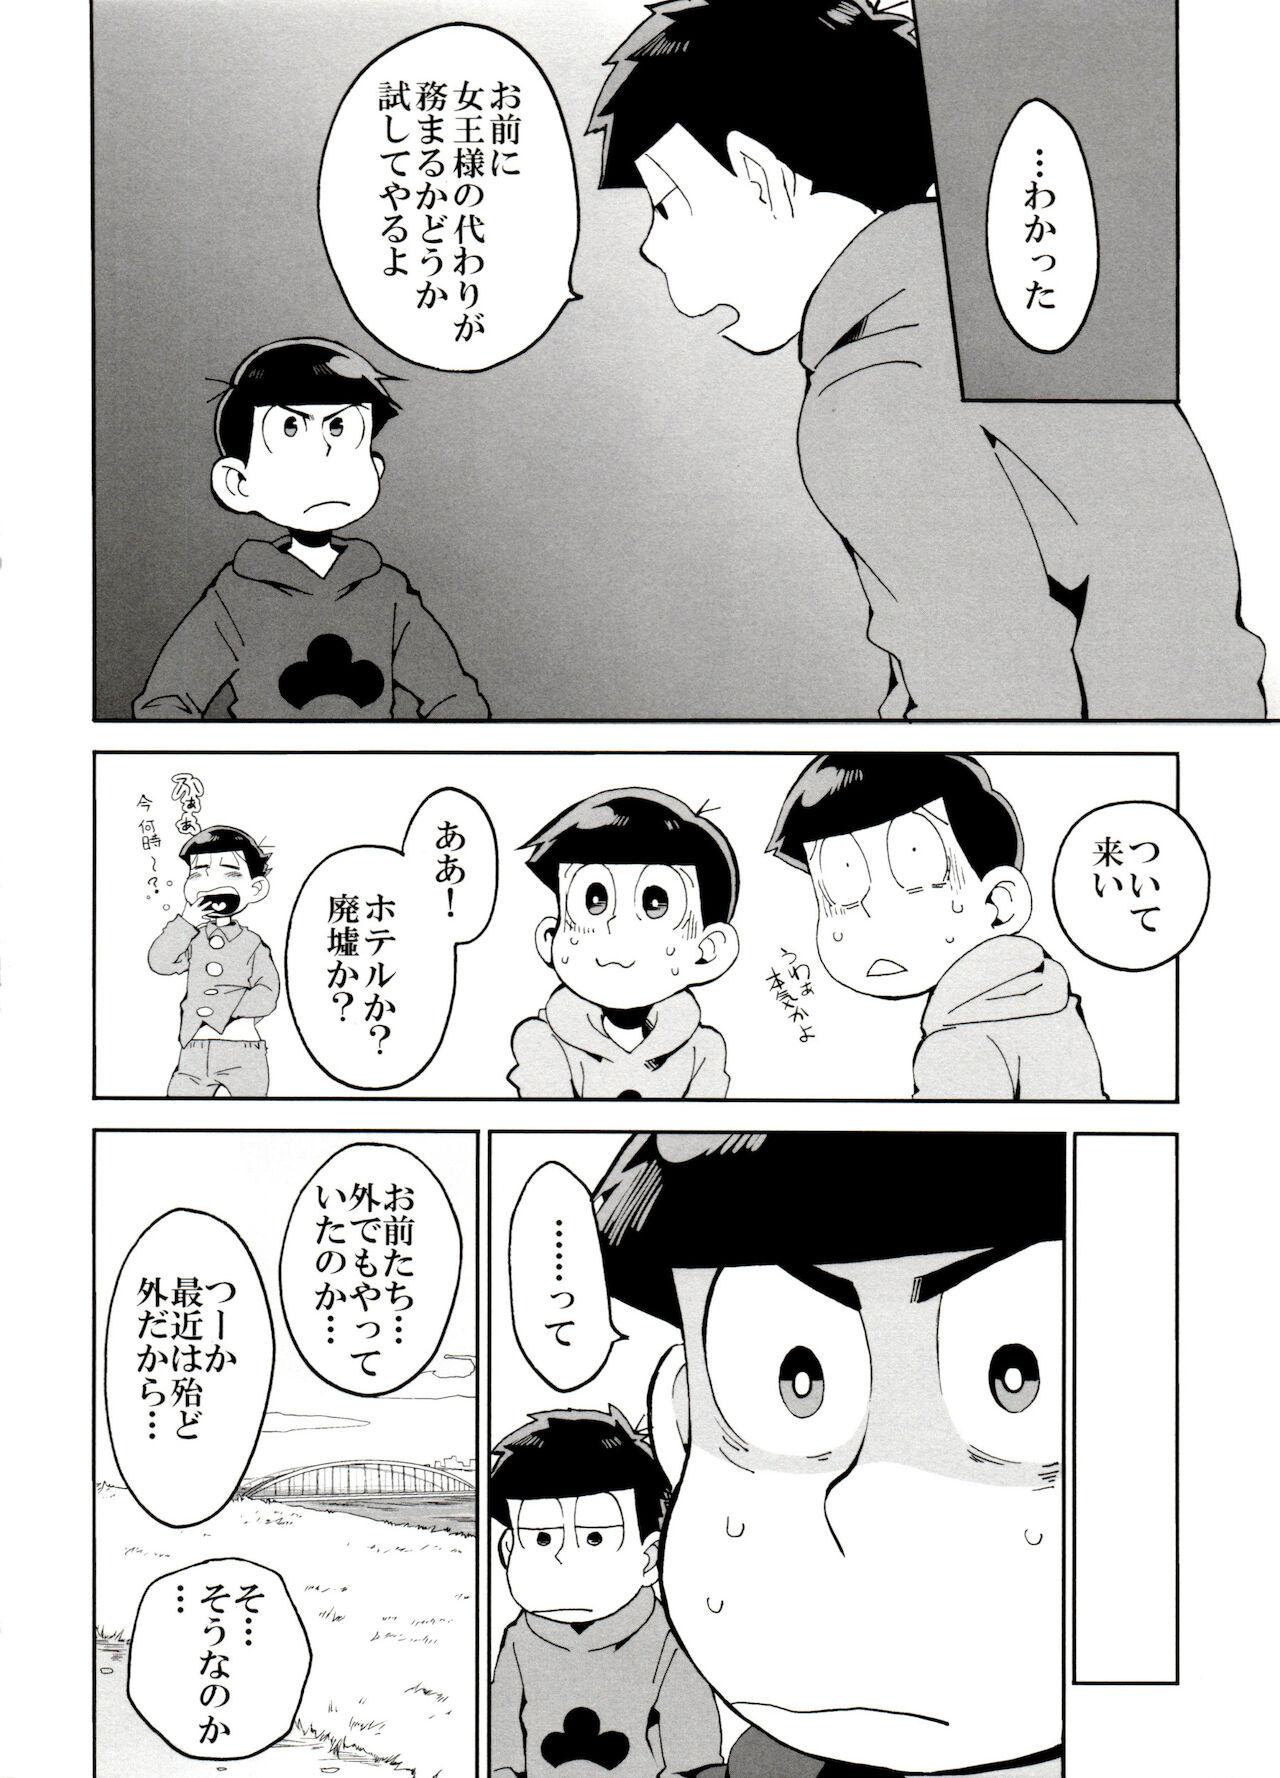 Bubblebutt SM Matsu 2 - Osomatsu-san Pegging - Page 6